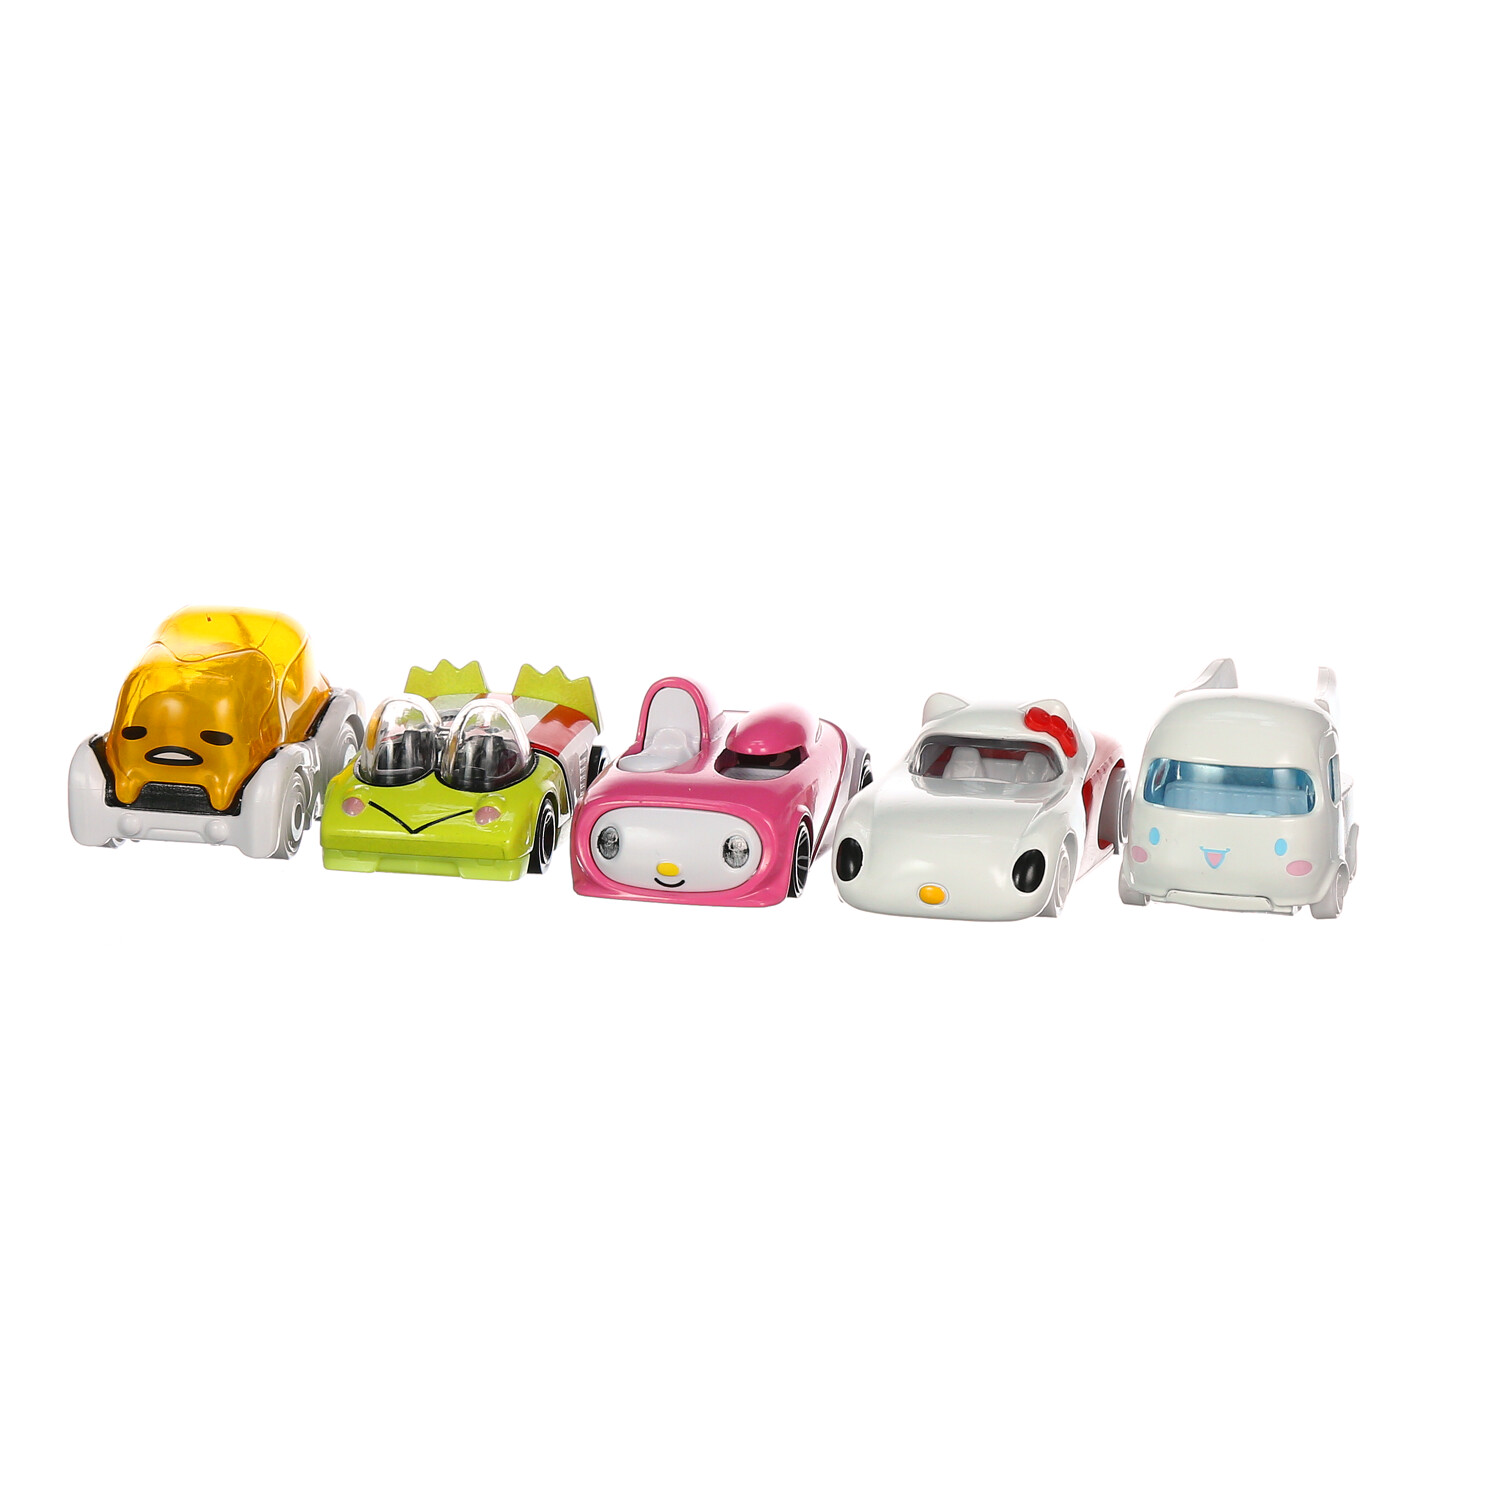 Hot Wheels Sanrio KEROPPI Character Car Mattel NEW FREE SHIP Hello